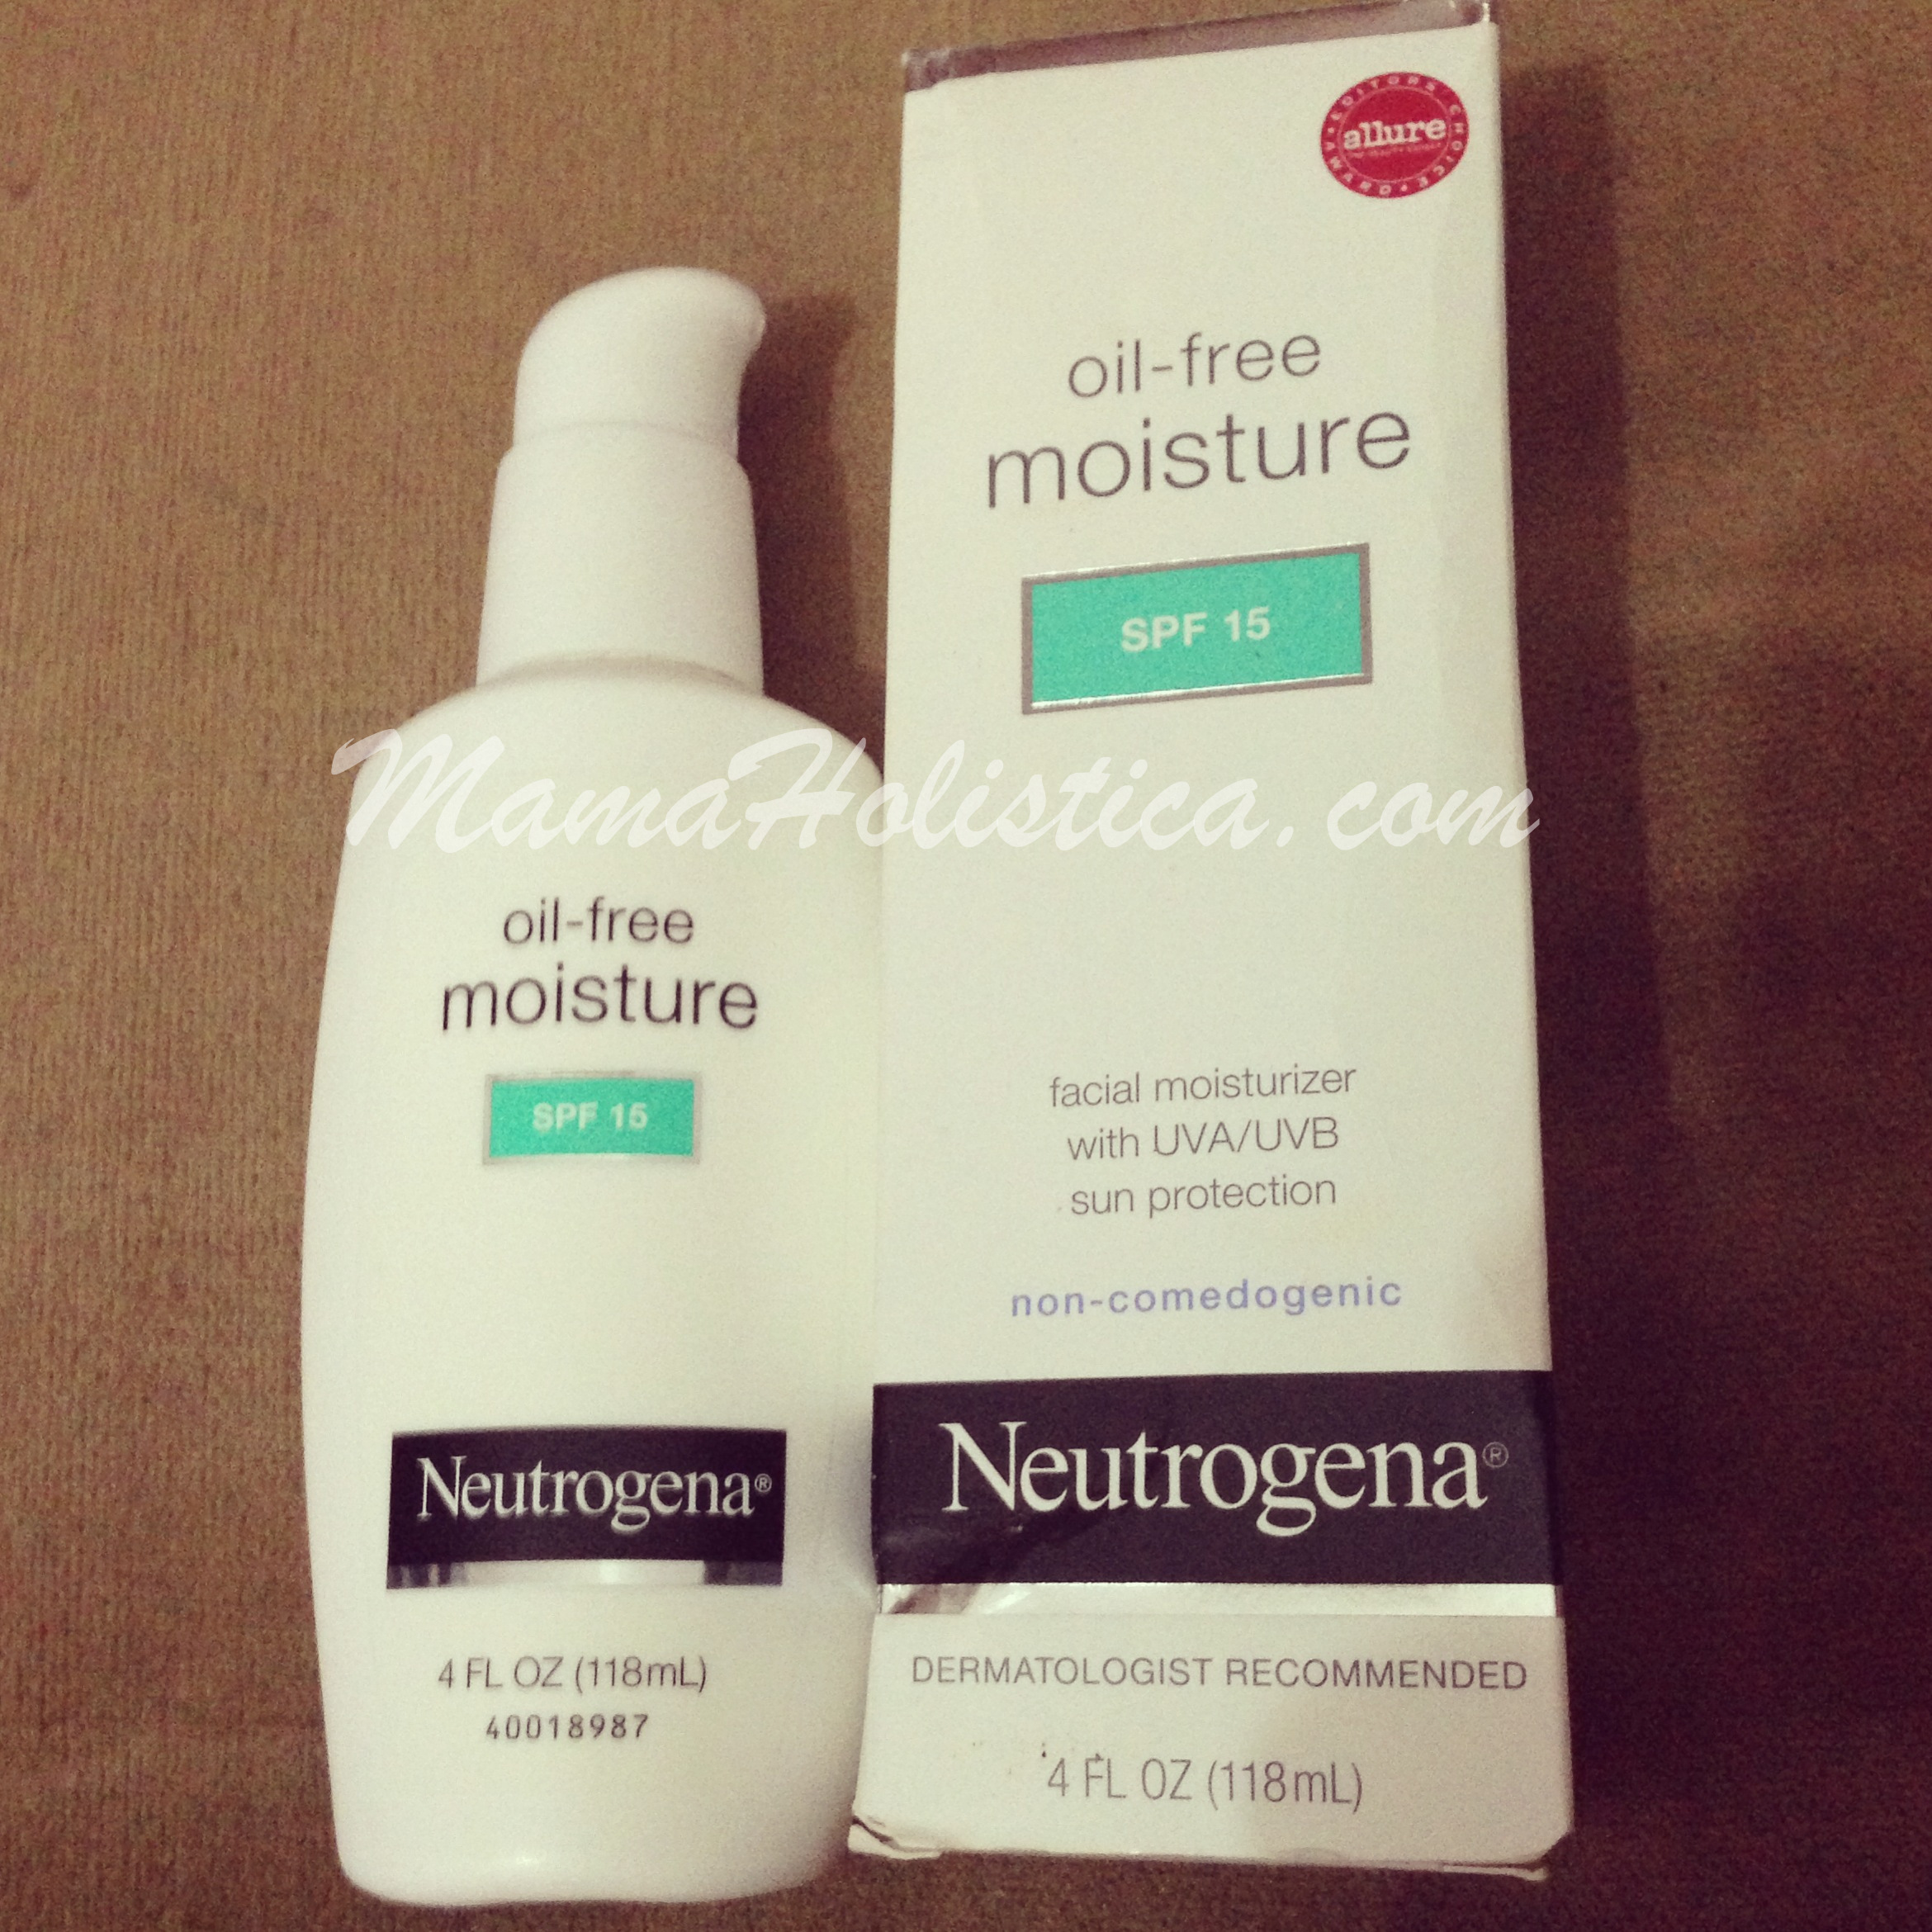 Neutrogena® Oil-Free Moisture with sunscreen SPF 15.